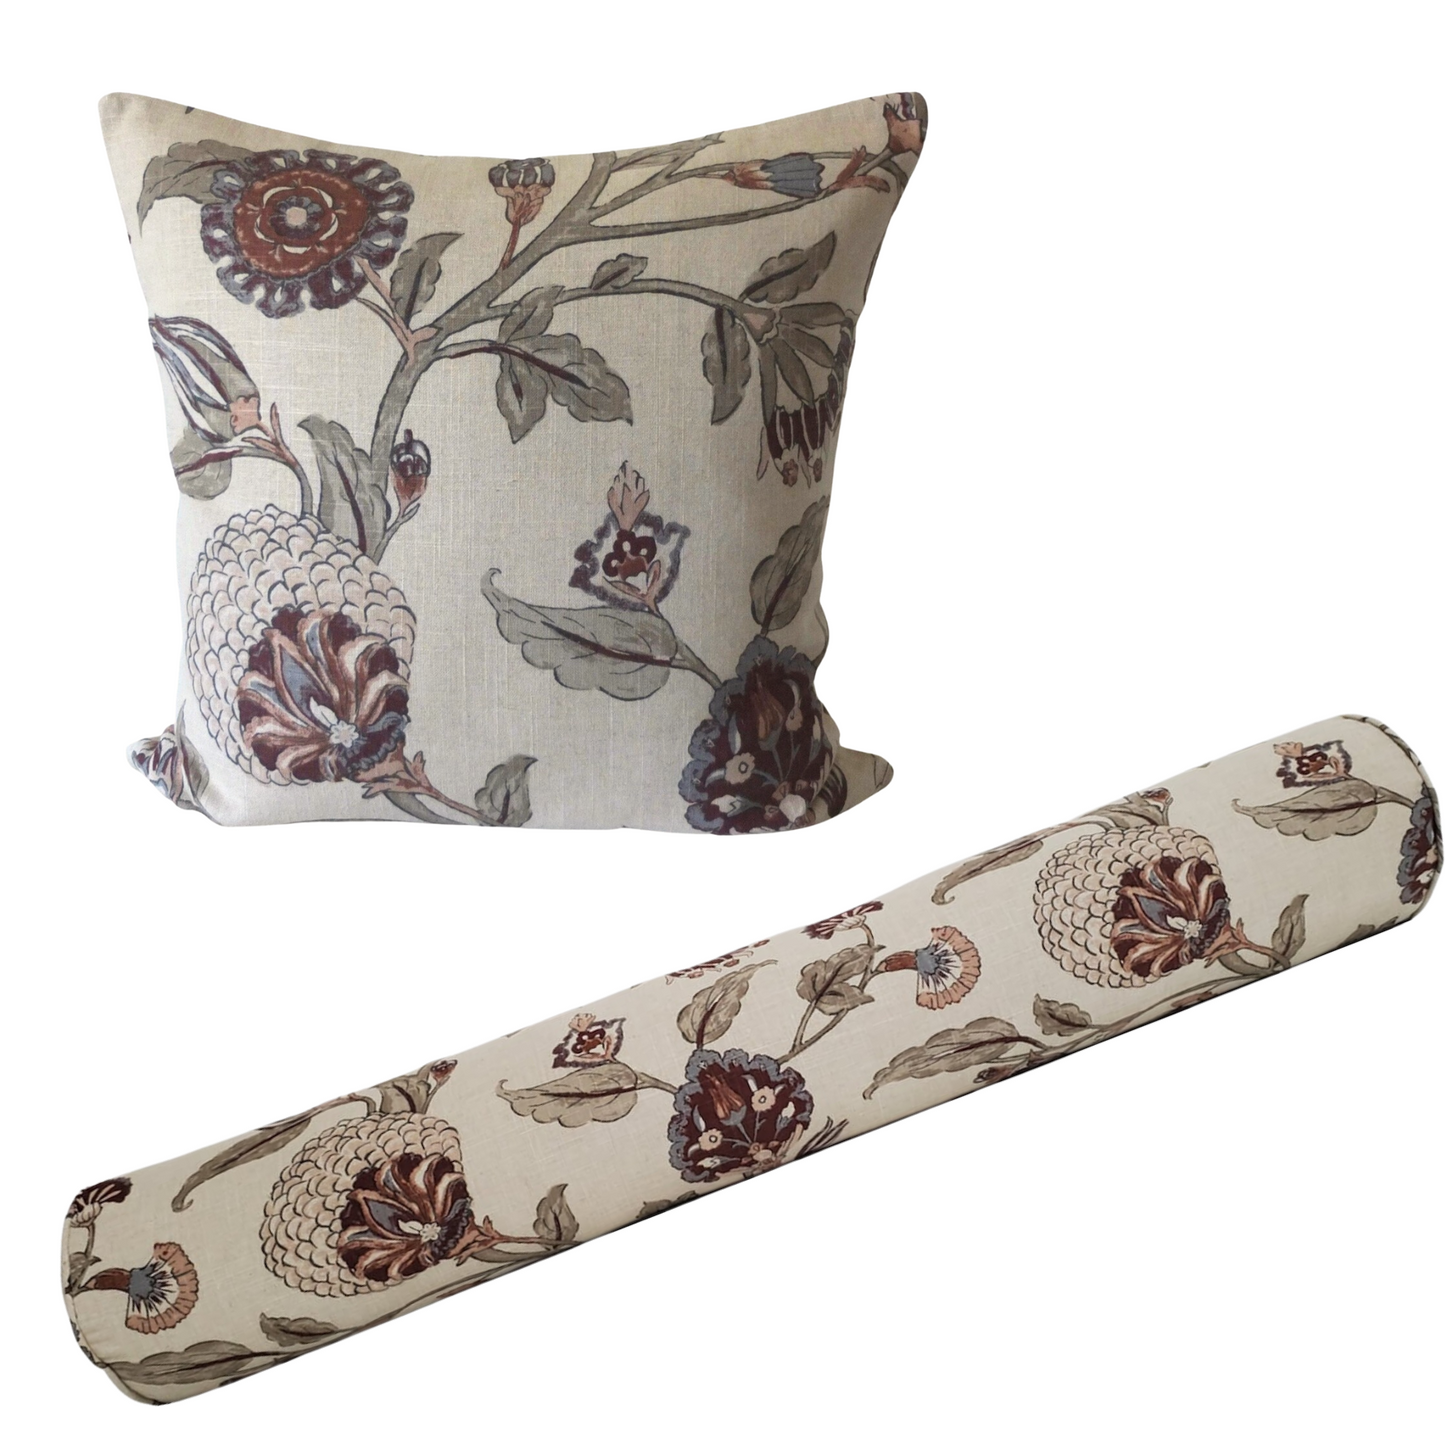 Dwell Studio Auretta Modern Floral Throw Pillow Cover in Linen / Long Decorative Pillows, Available in Lumbar, Bolster, Euro Sham sizes